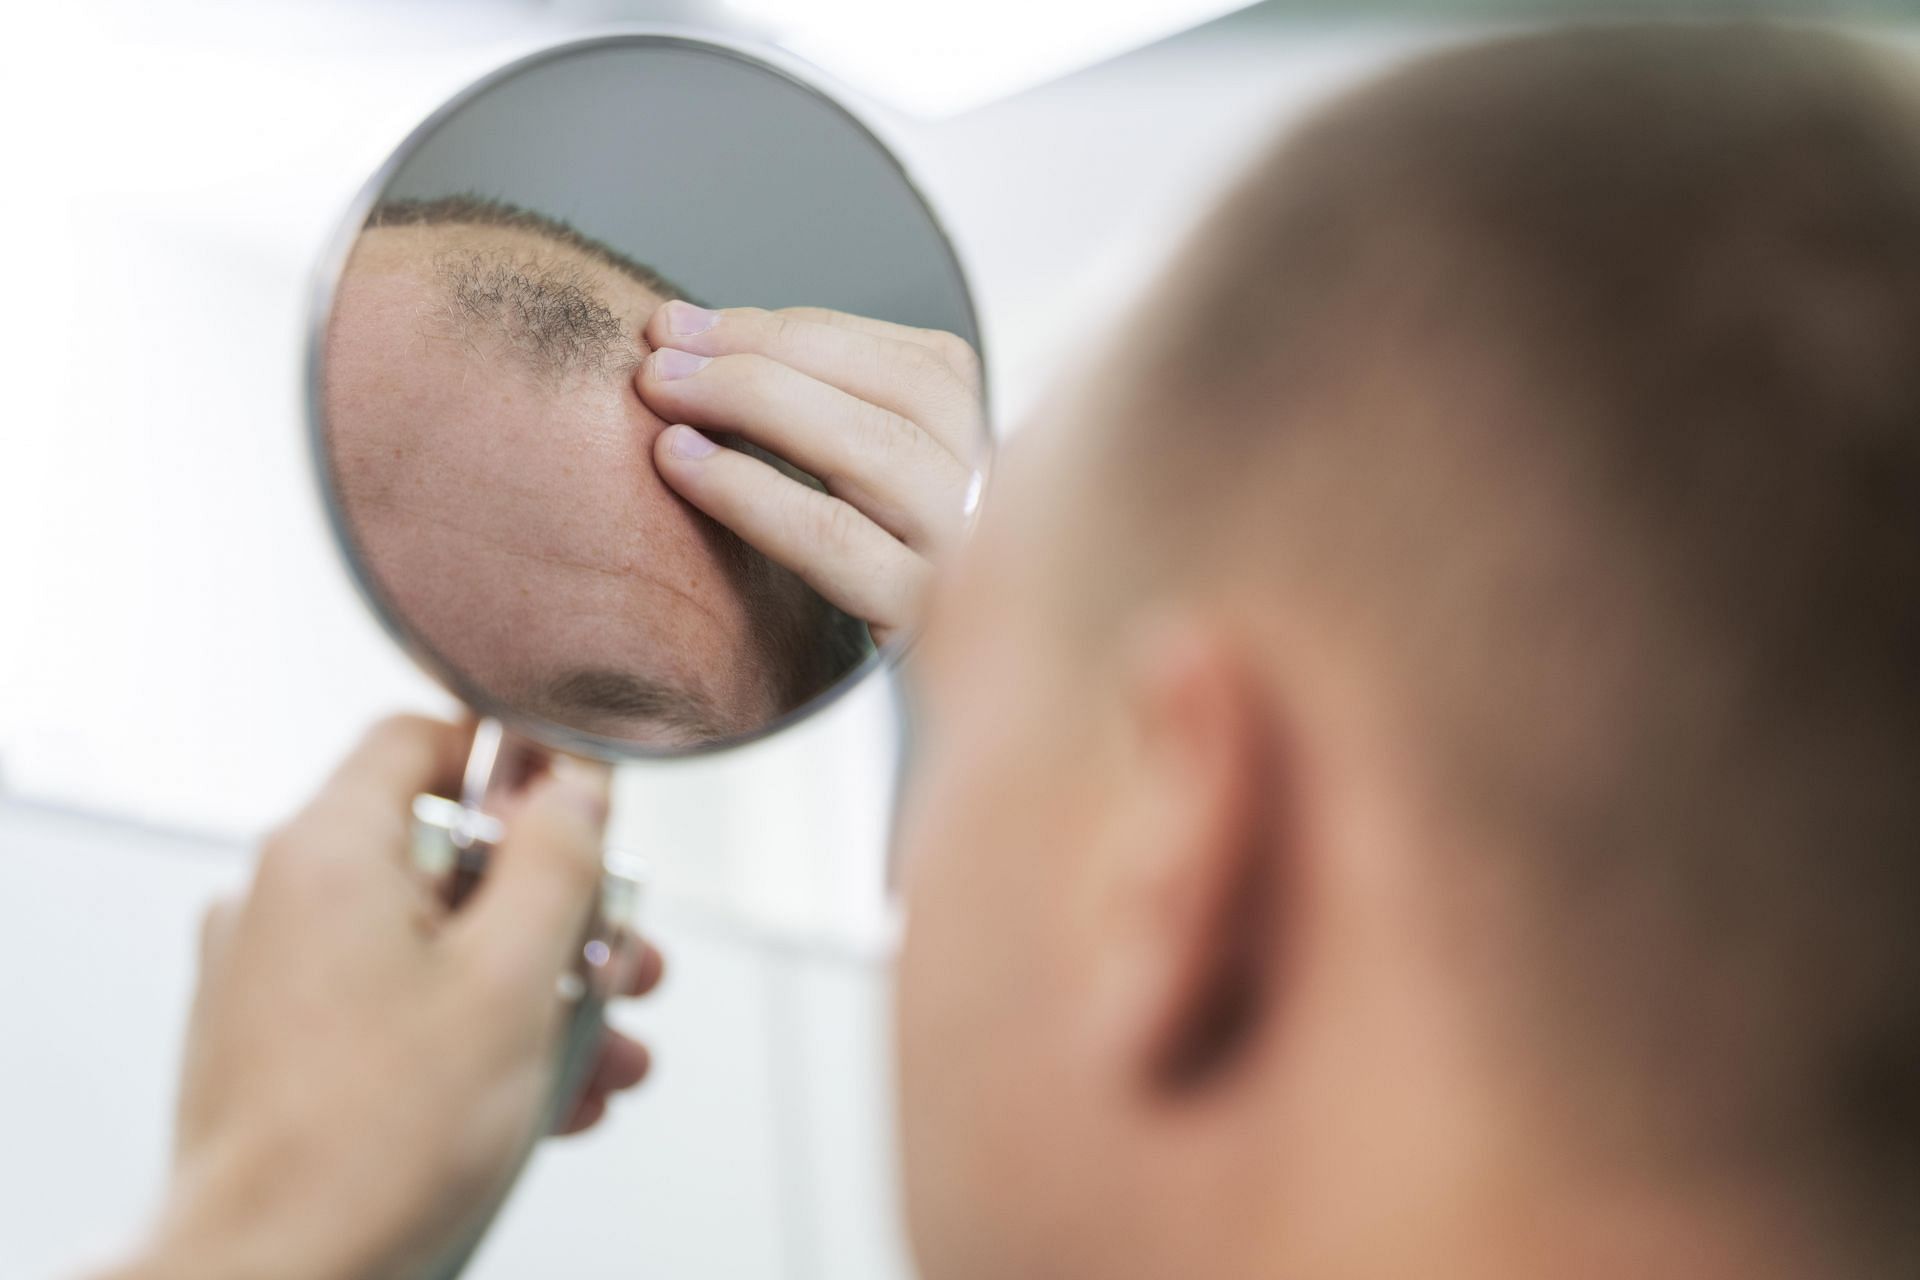 While treatment for scalp eczema is available, many people experience shame in seeking help. (Image via Freepik/ Freepik)